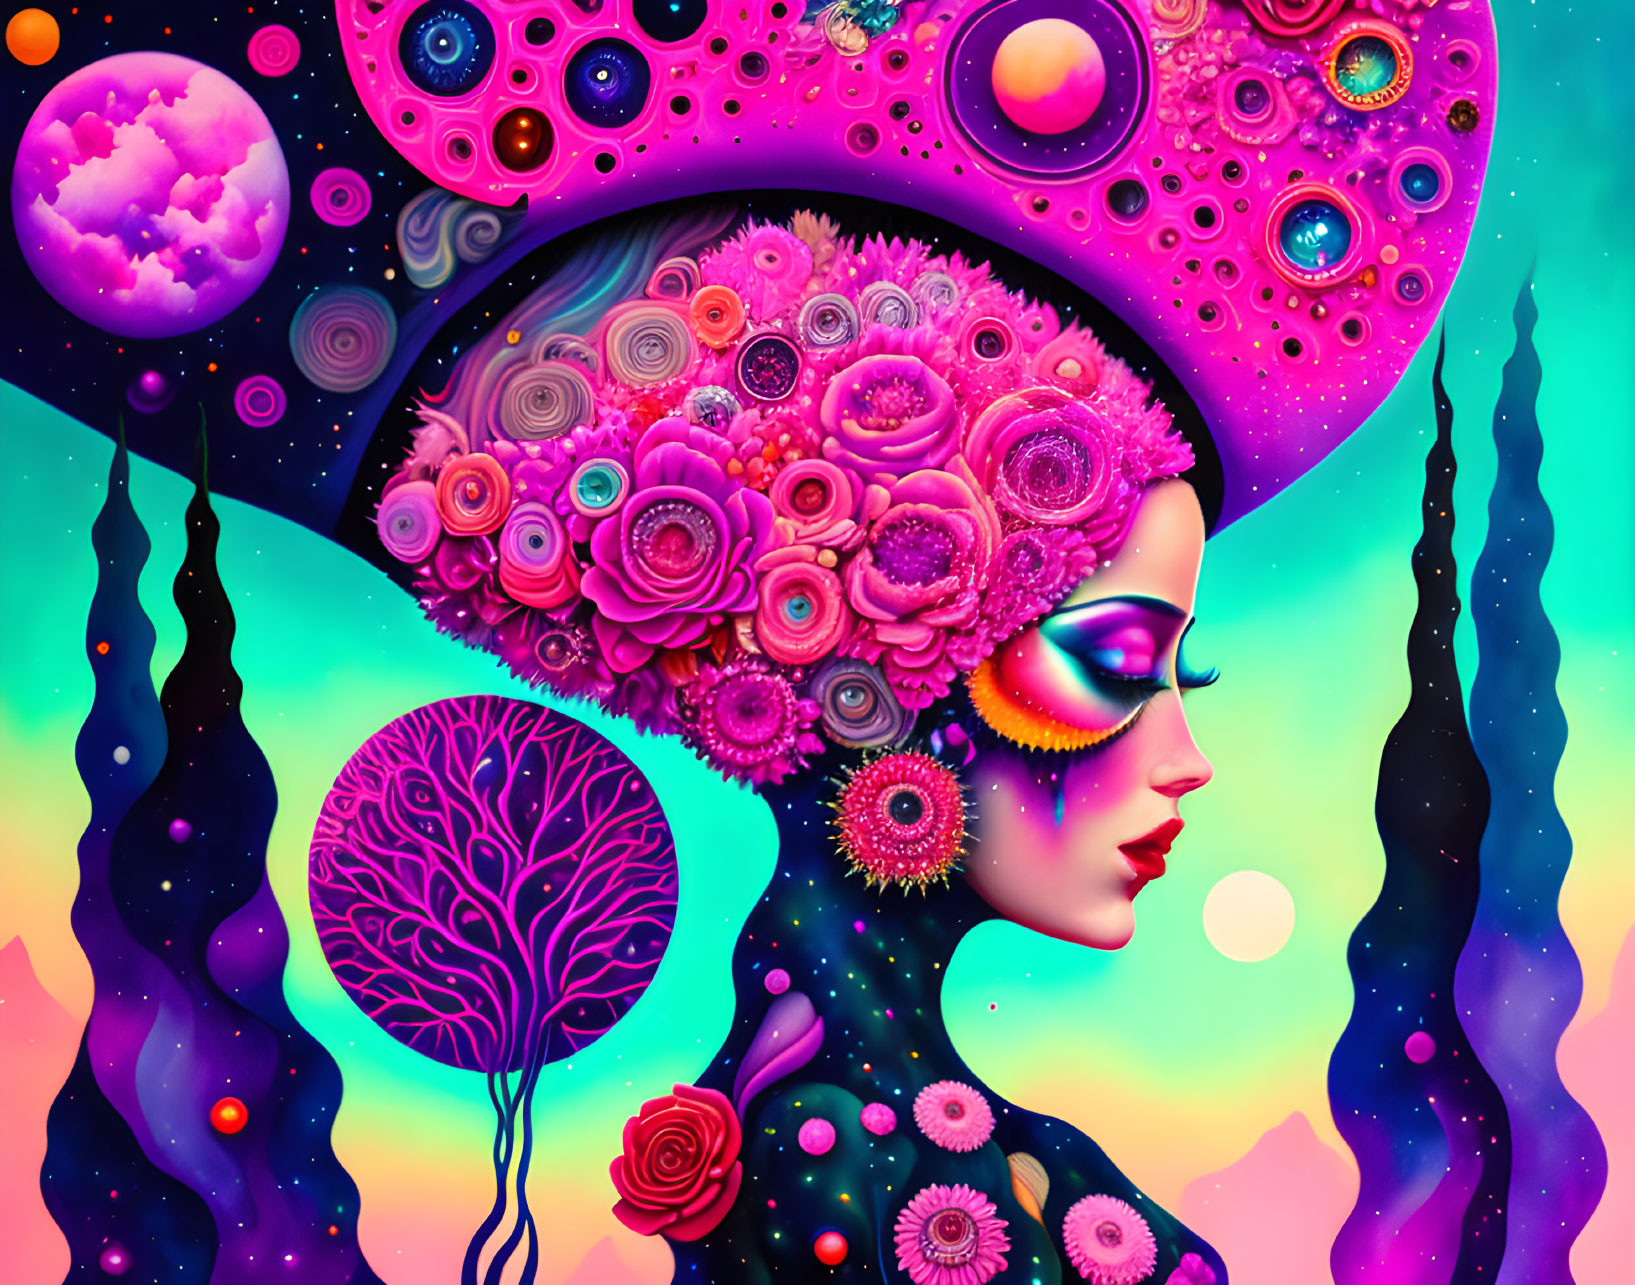 Vibrant digital artwork: Woman with flower hair, cosmic backdrop, planets, tree symbol